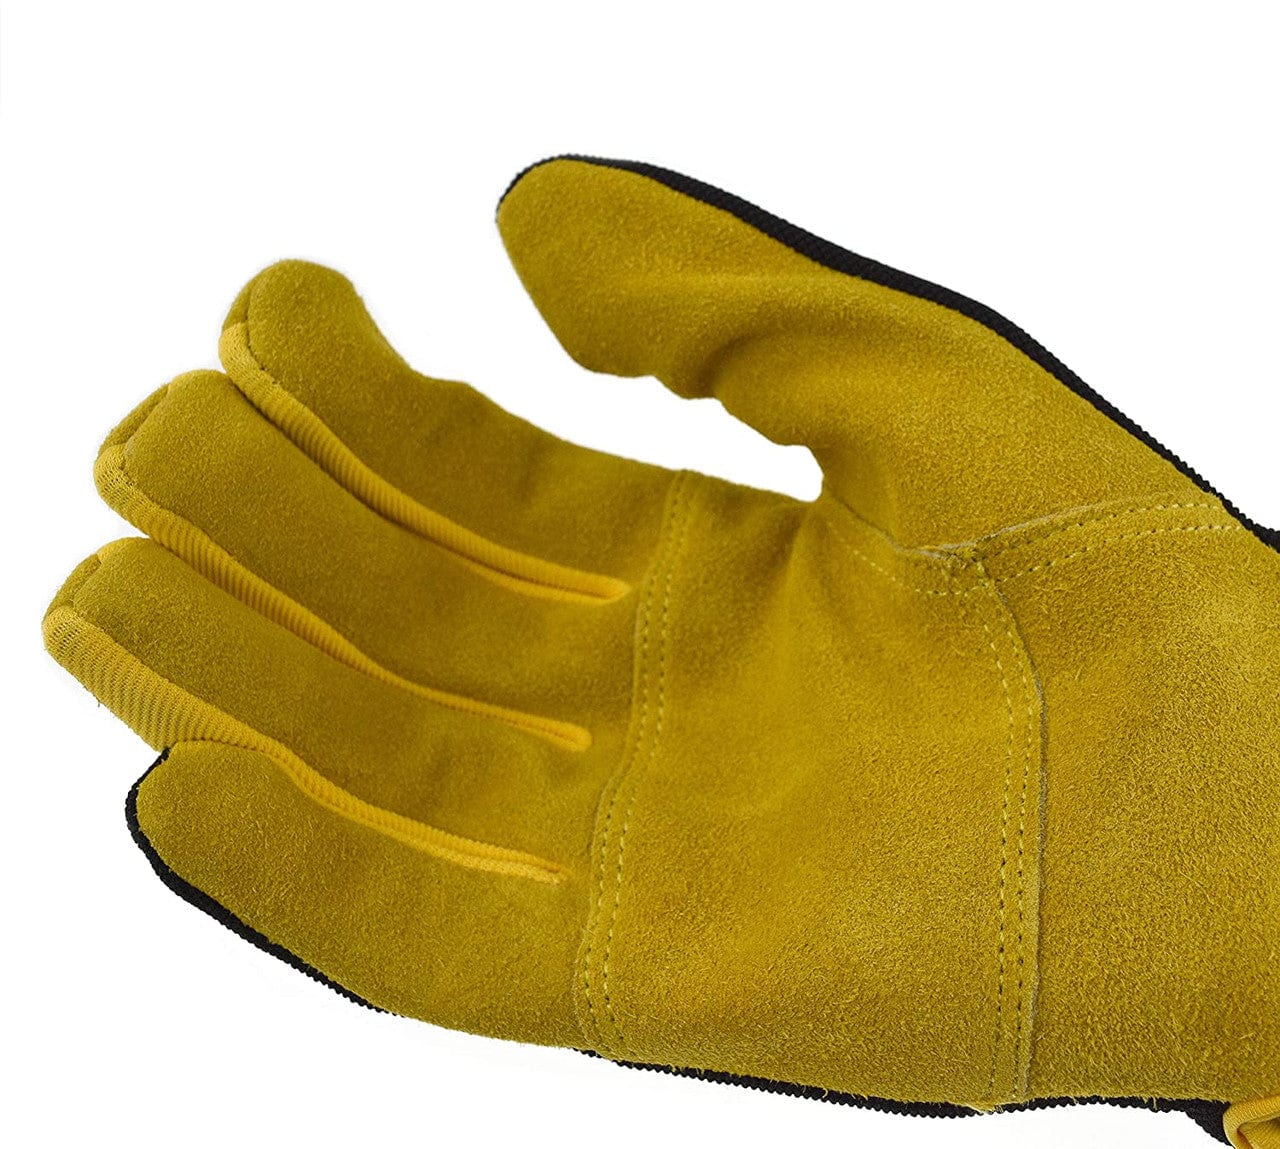 Task Gloves, Mechanics Gloves - - RADIANS DeWalt DPG20 Mechanics Work Gloves